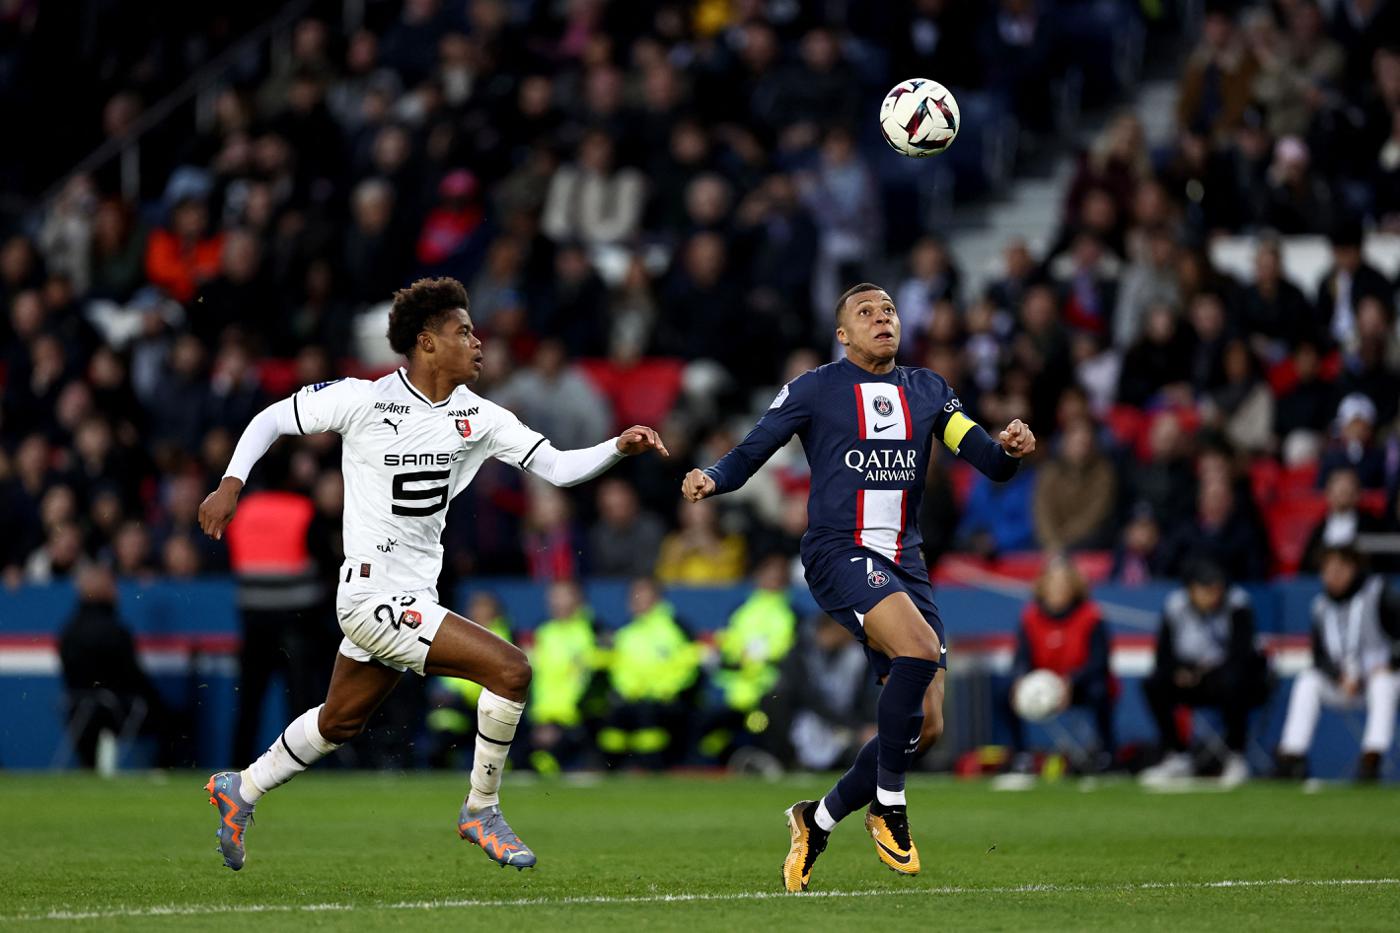 PSG vs Rennes - 0:2. French Championship, round 28. Match review, statistics.